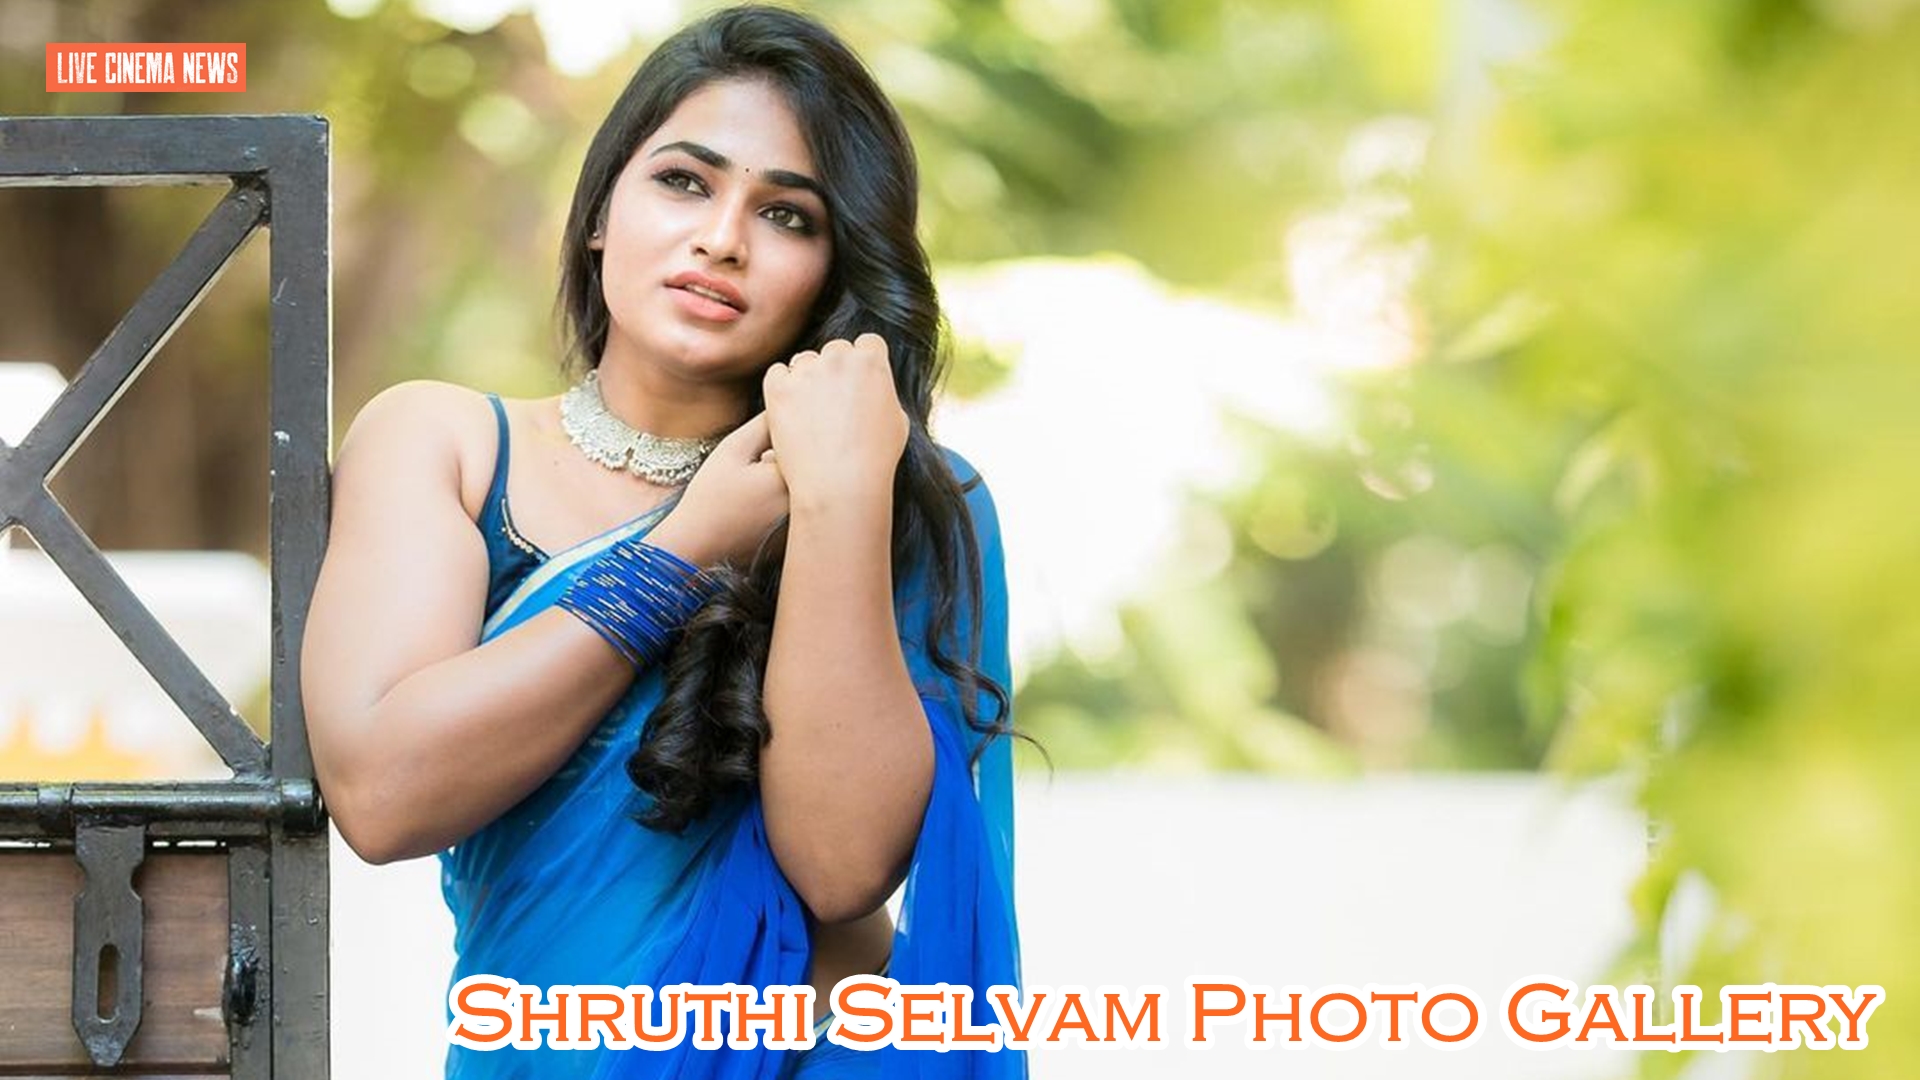 Shruthi Selvam Photo Gallery